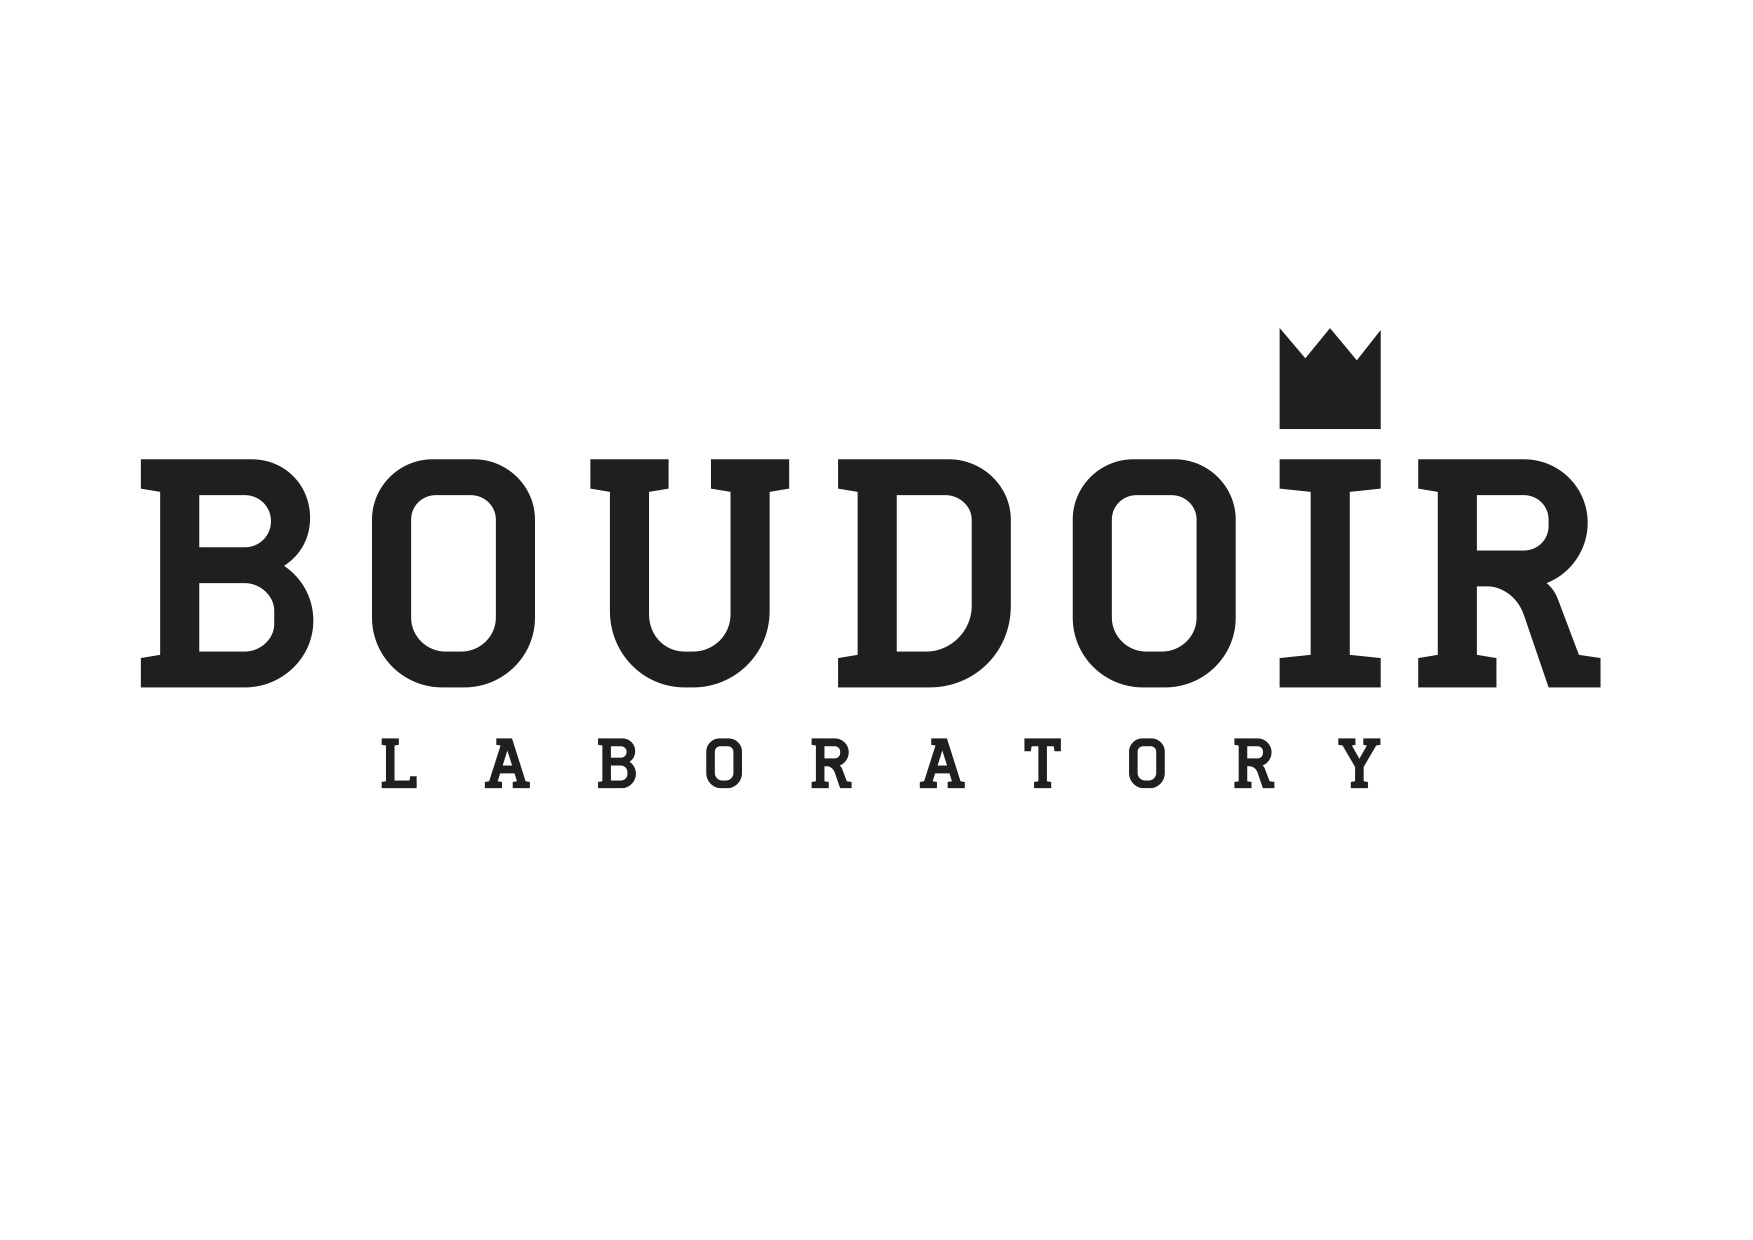 BOUDOIR logo final